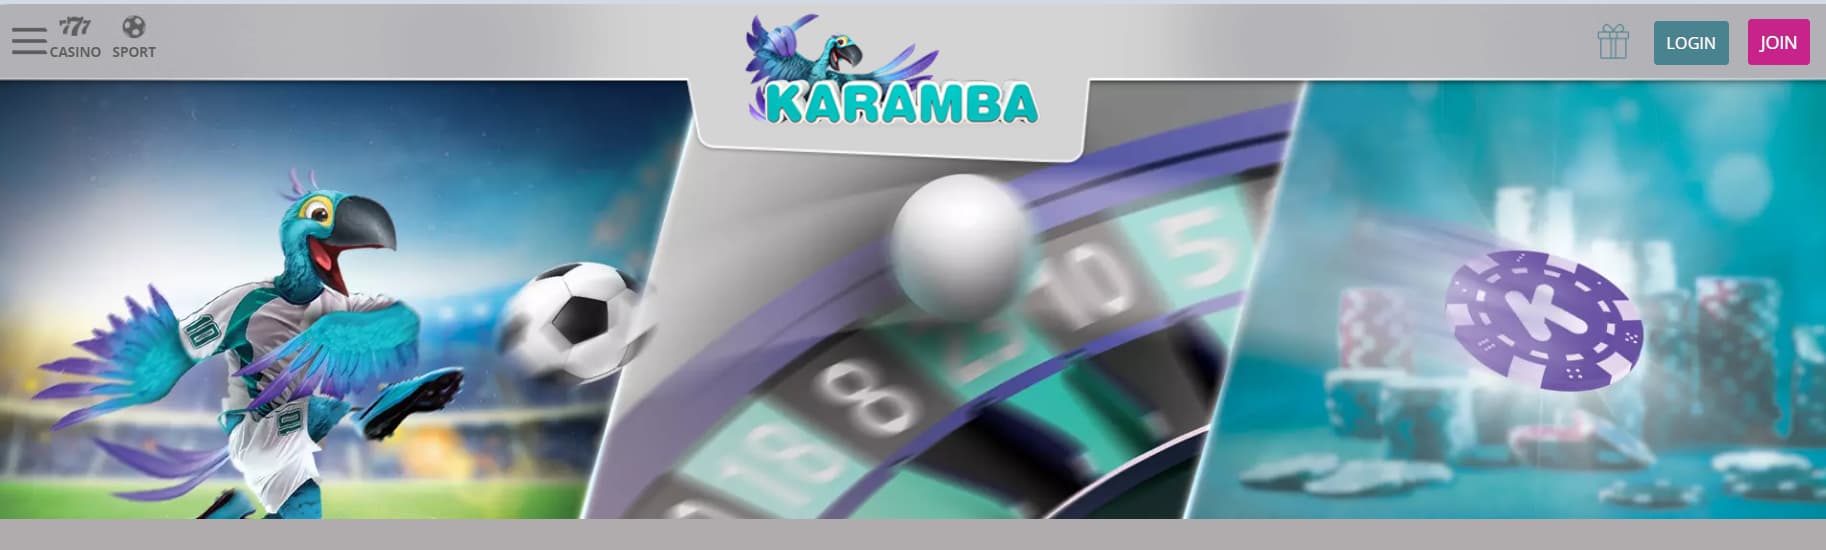 karamba casino programme de fidélité